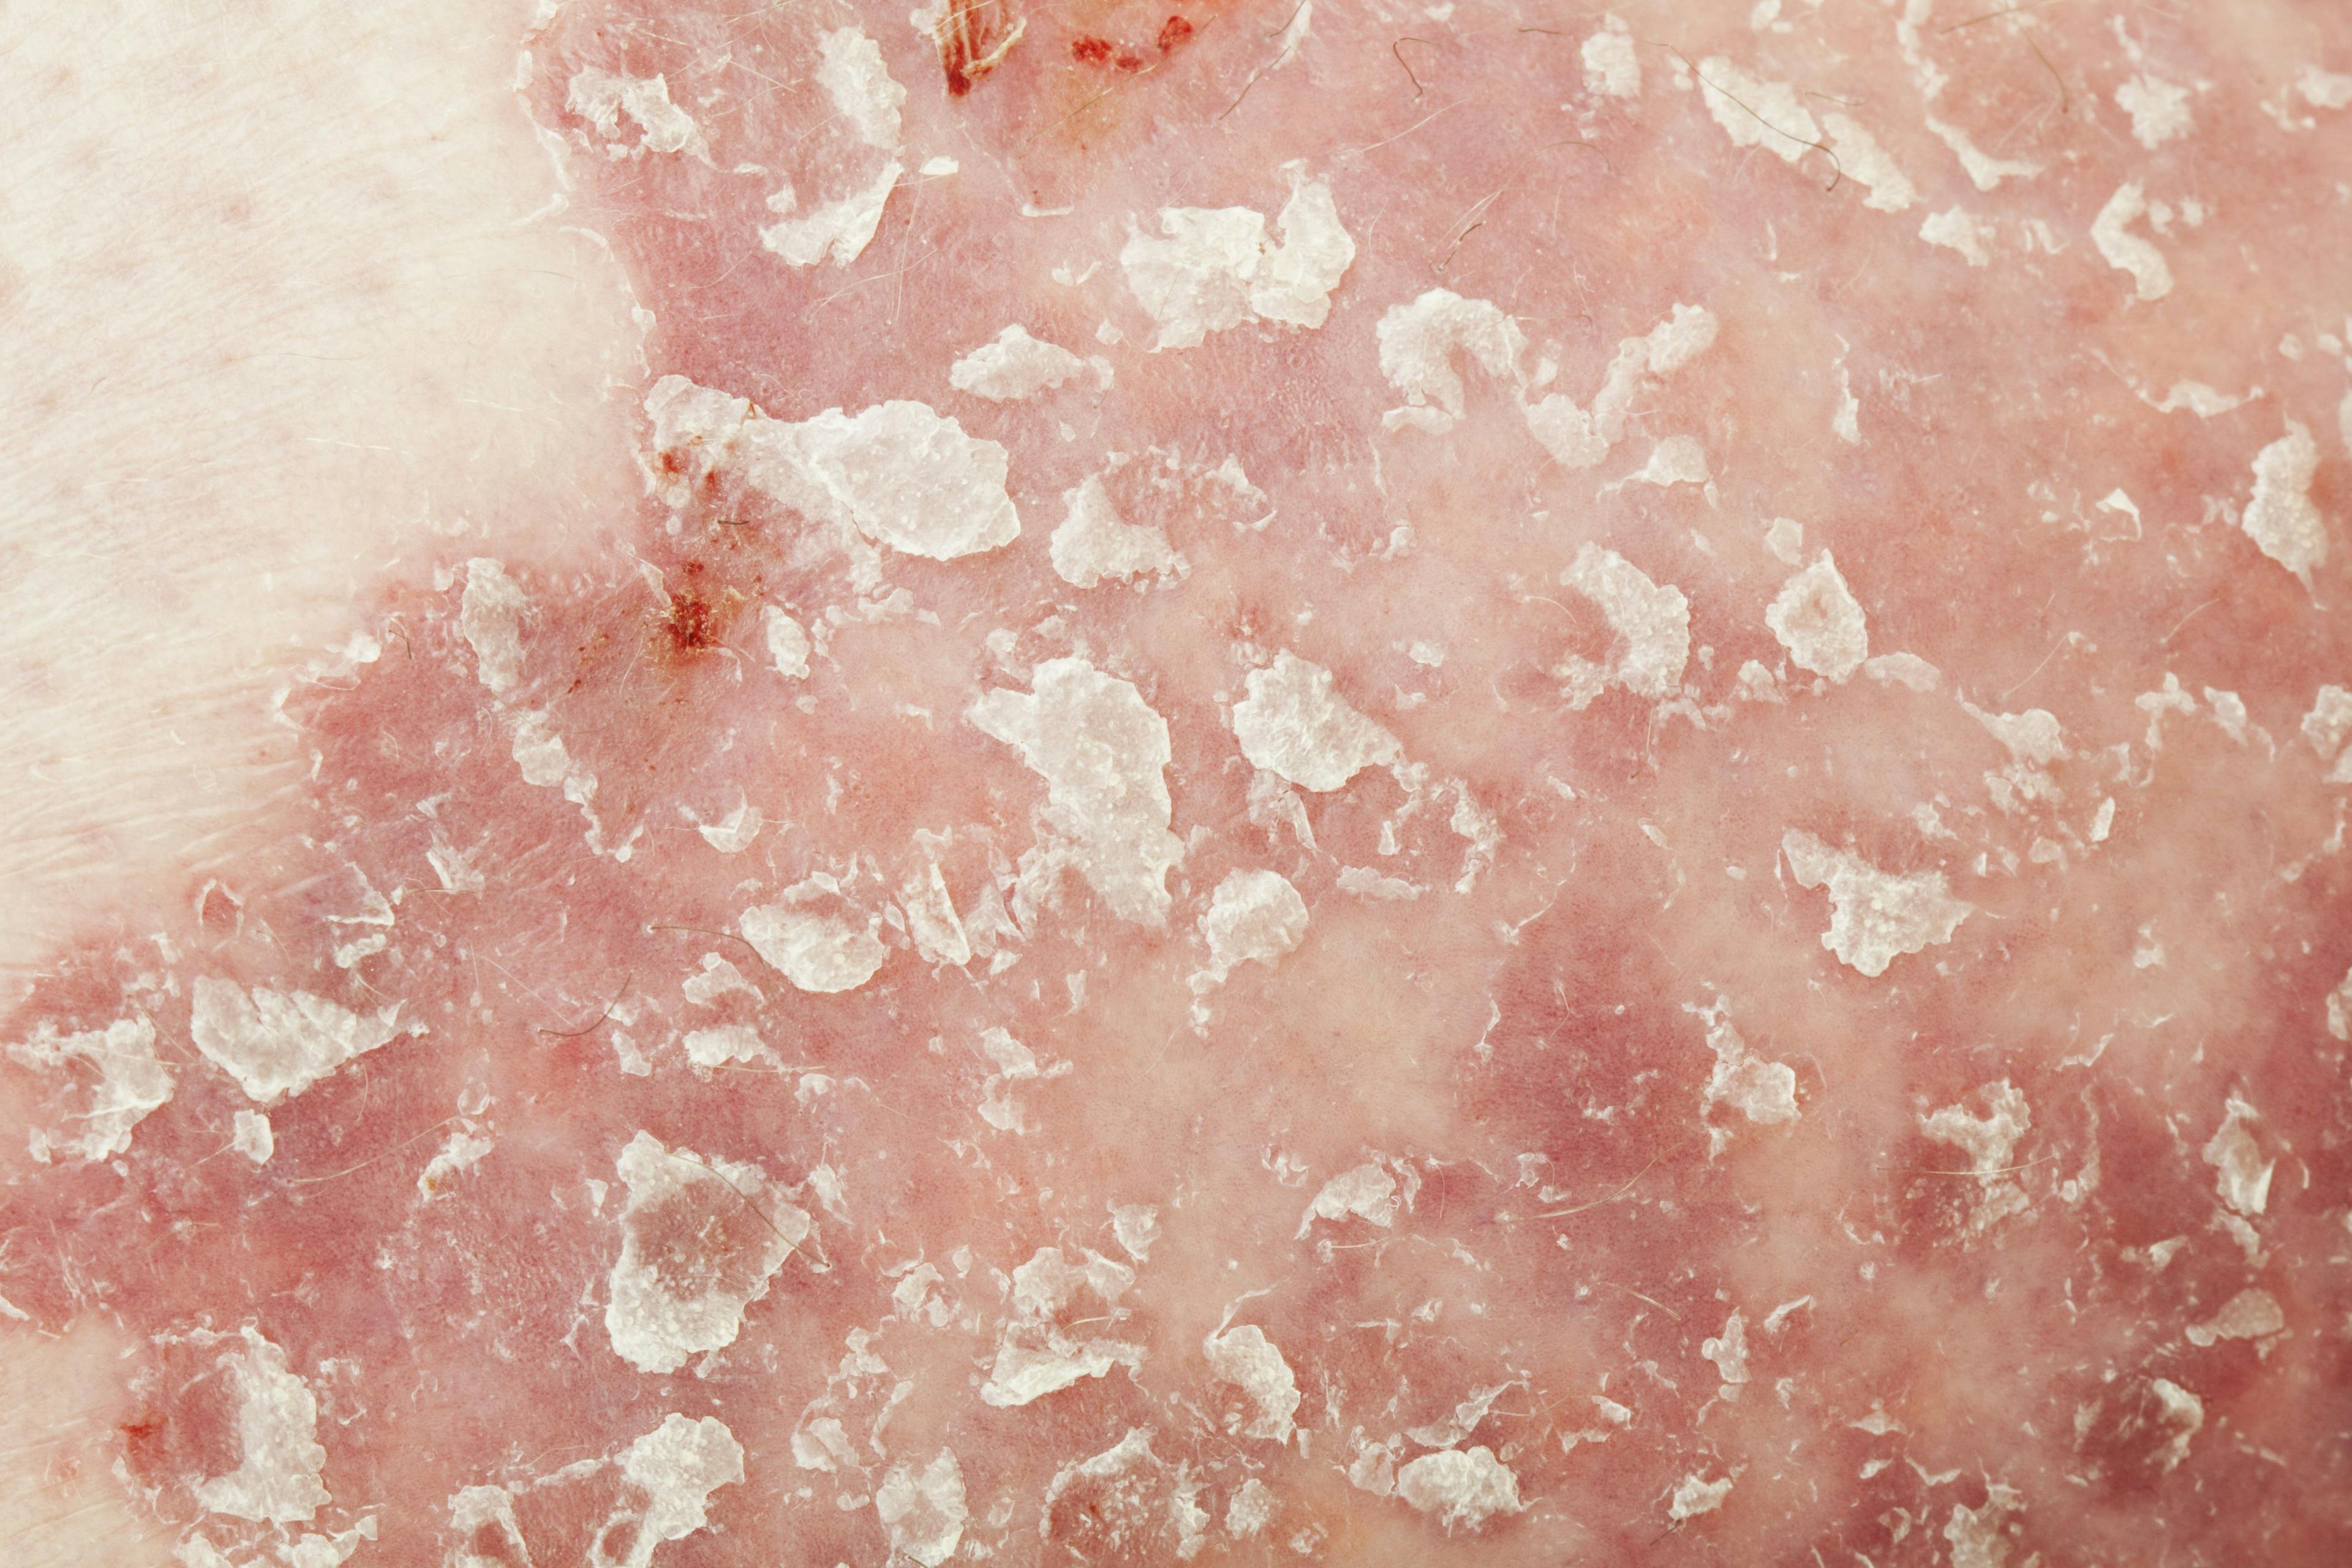 Bimekizumab Long-Term Skin Clearance Data for Plaque Psoriasis Presented at AAD 2022